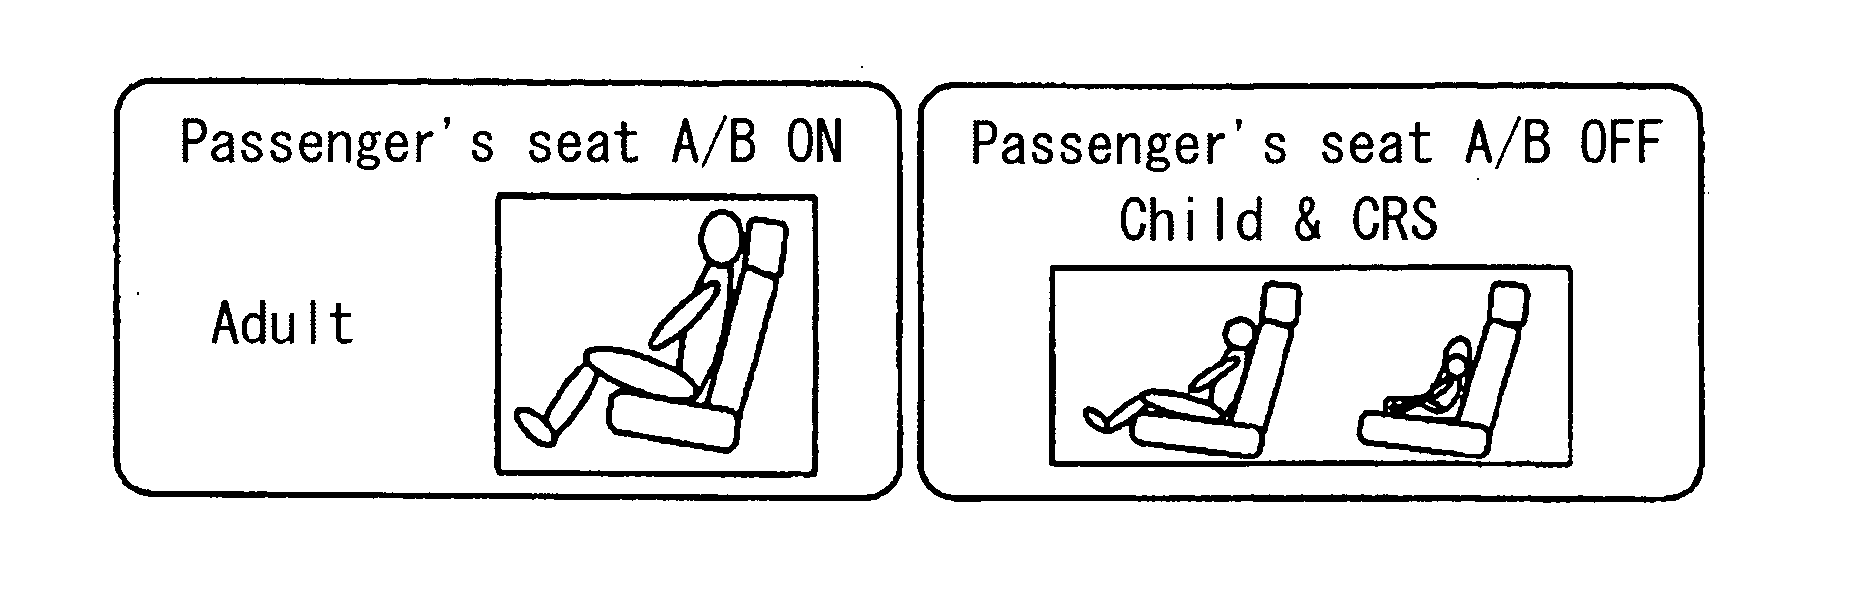 Seating detector